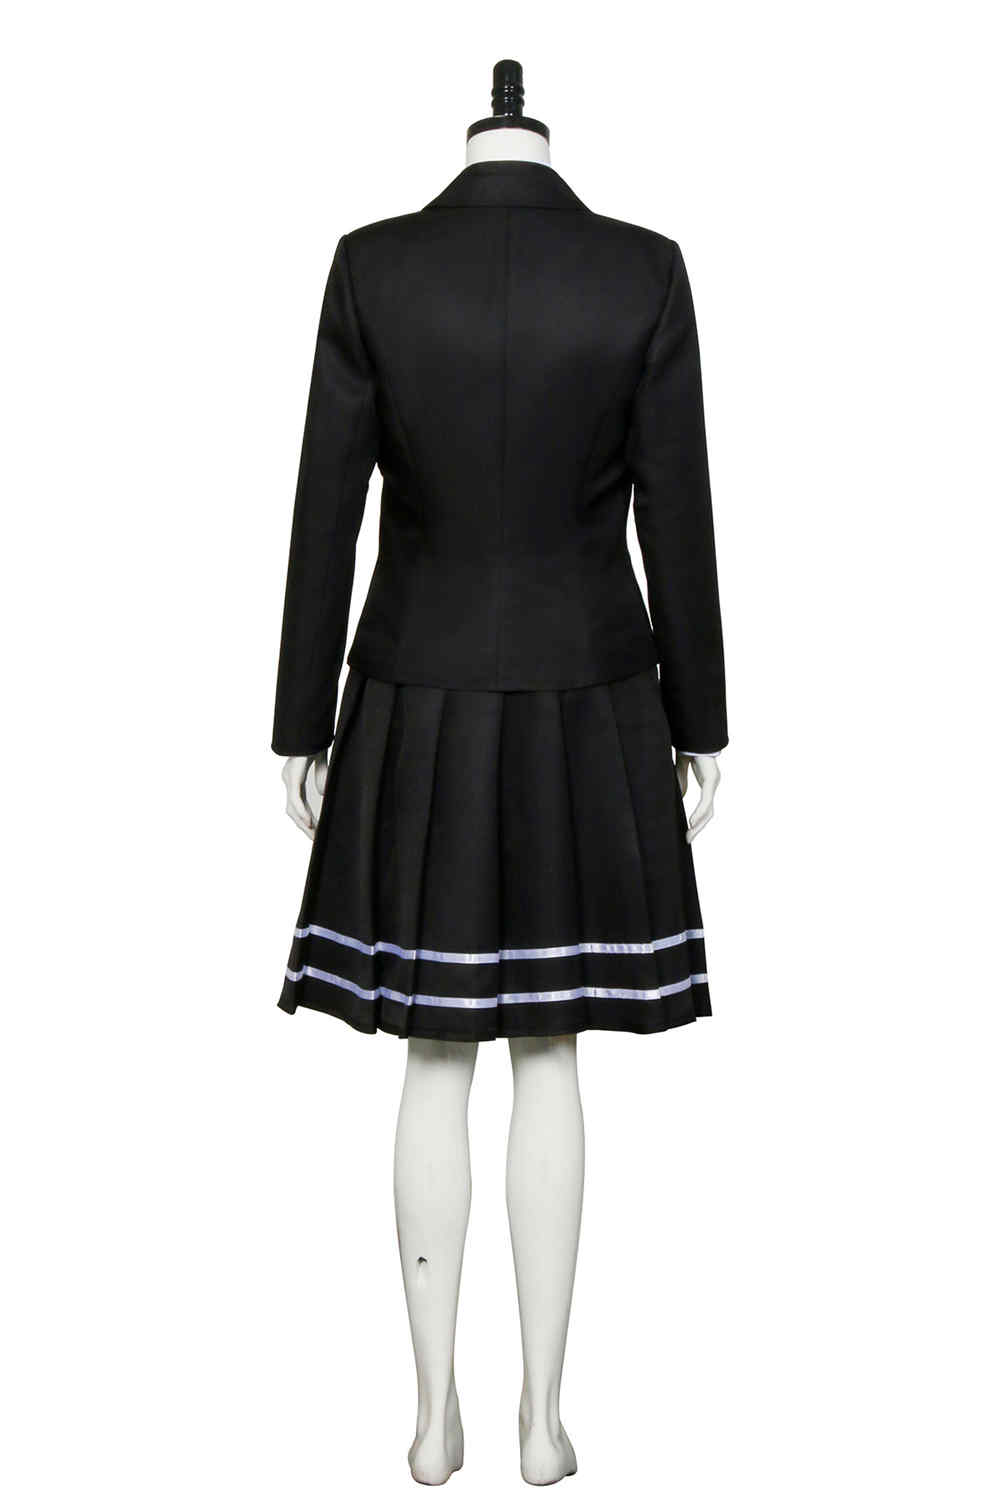 Anime Danganronpa V3 Shirogane Tsumugi School Uniform Skirts Outfit Halloween Carnival Costume Cosplay-Takerlama